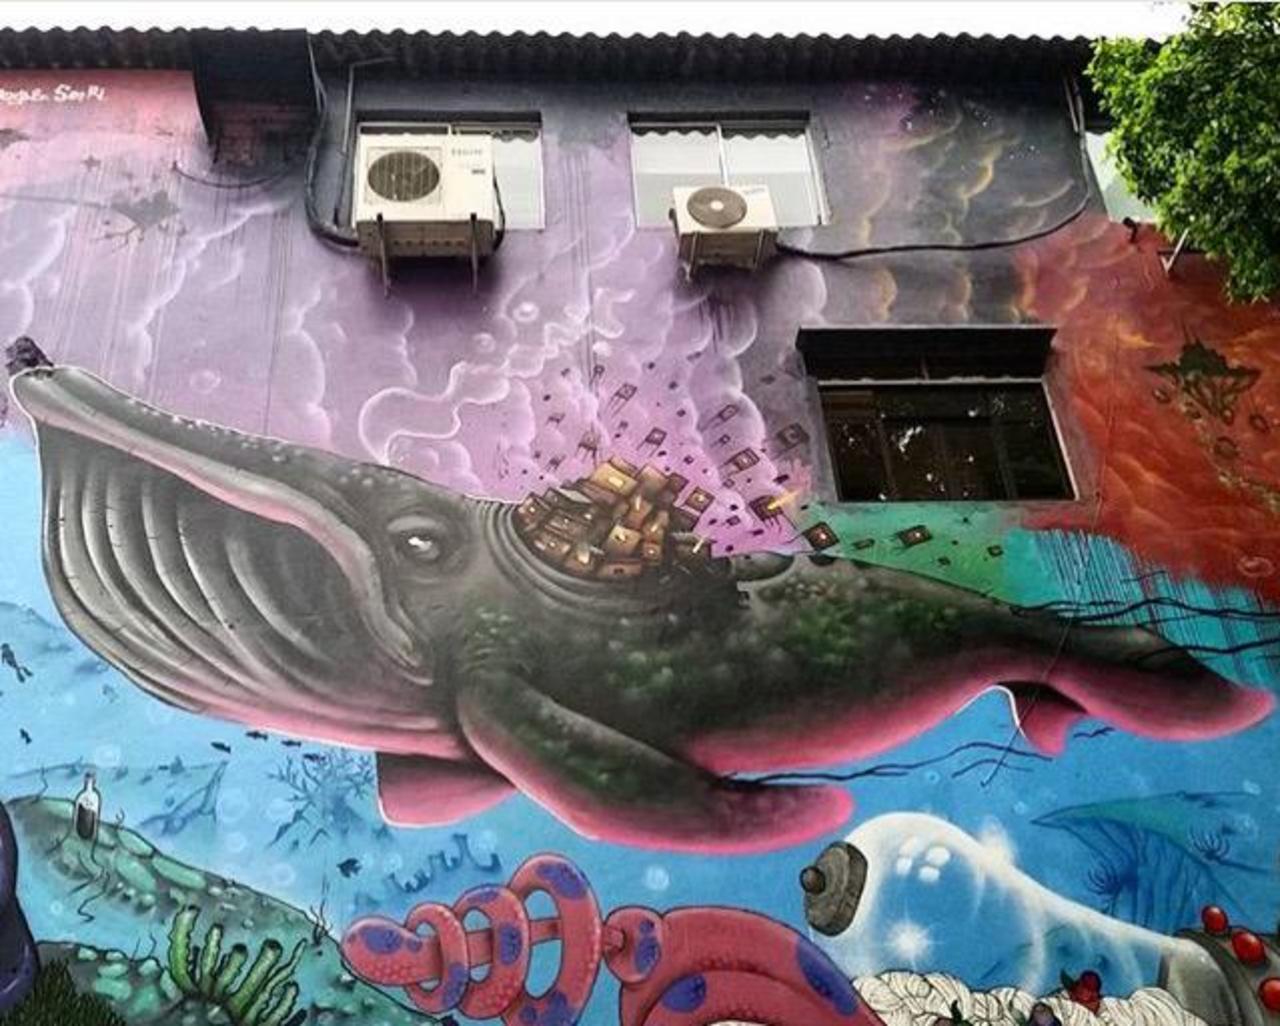 Street Art by joks_johnes Pinheiros, São Paulo 

#art #mural #graffiti #streetart http://t.co/ZfP7sxQSkh